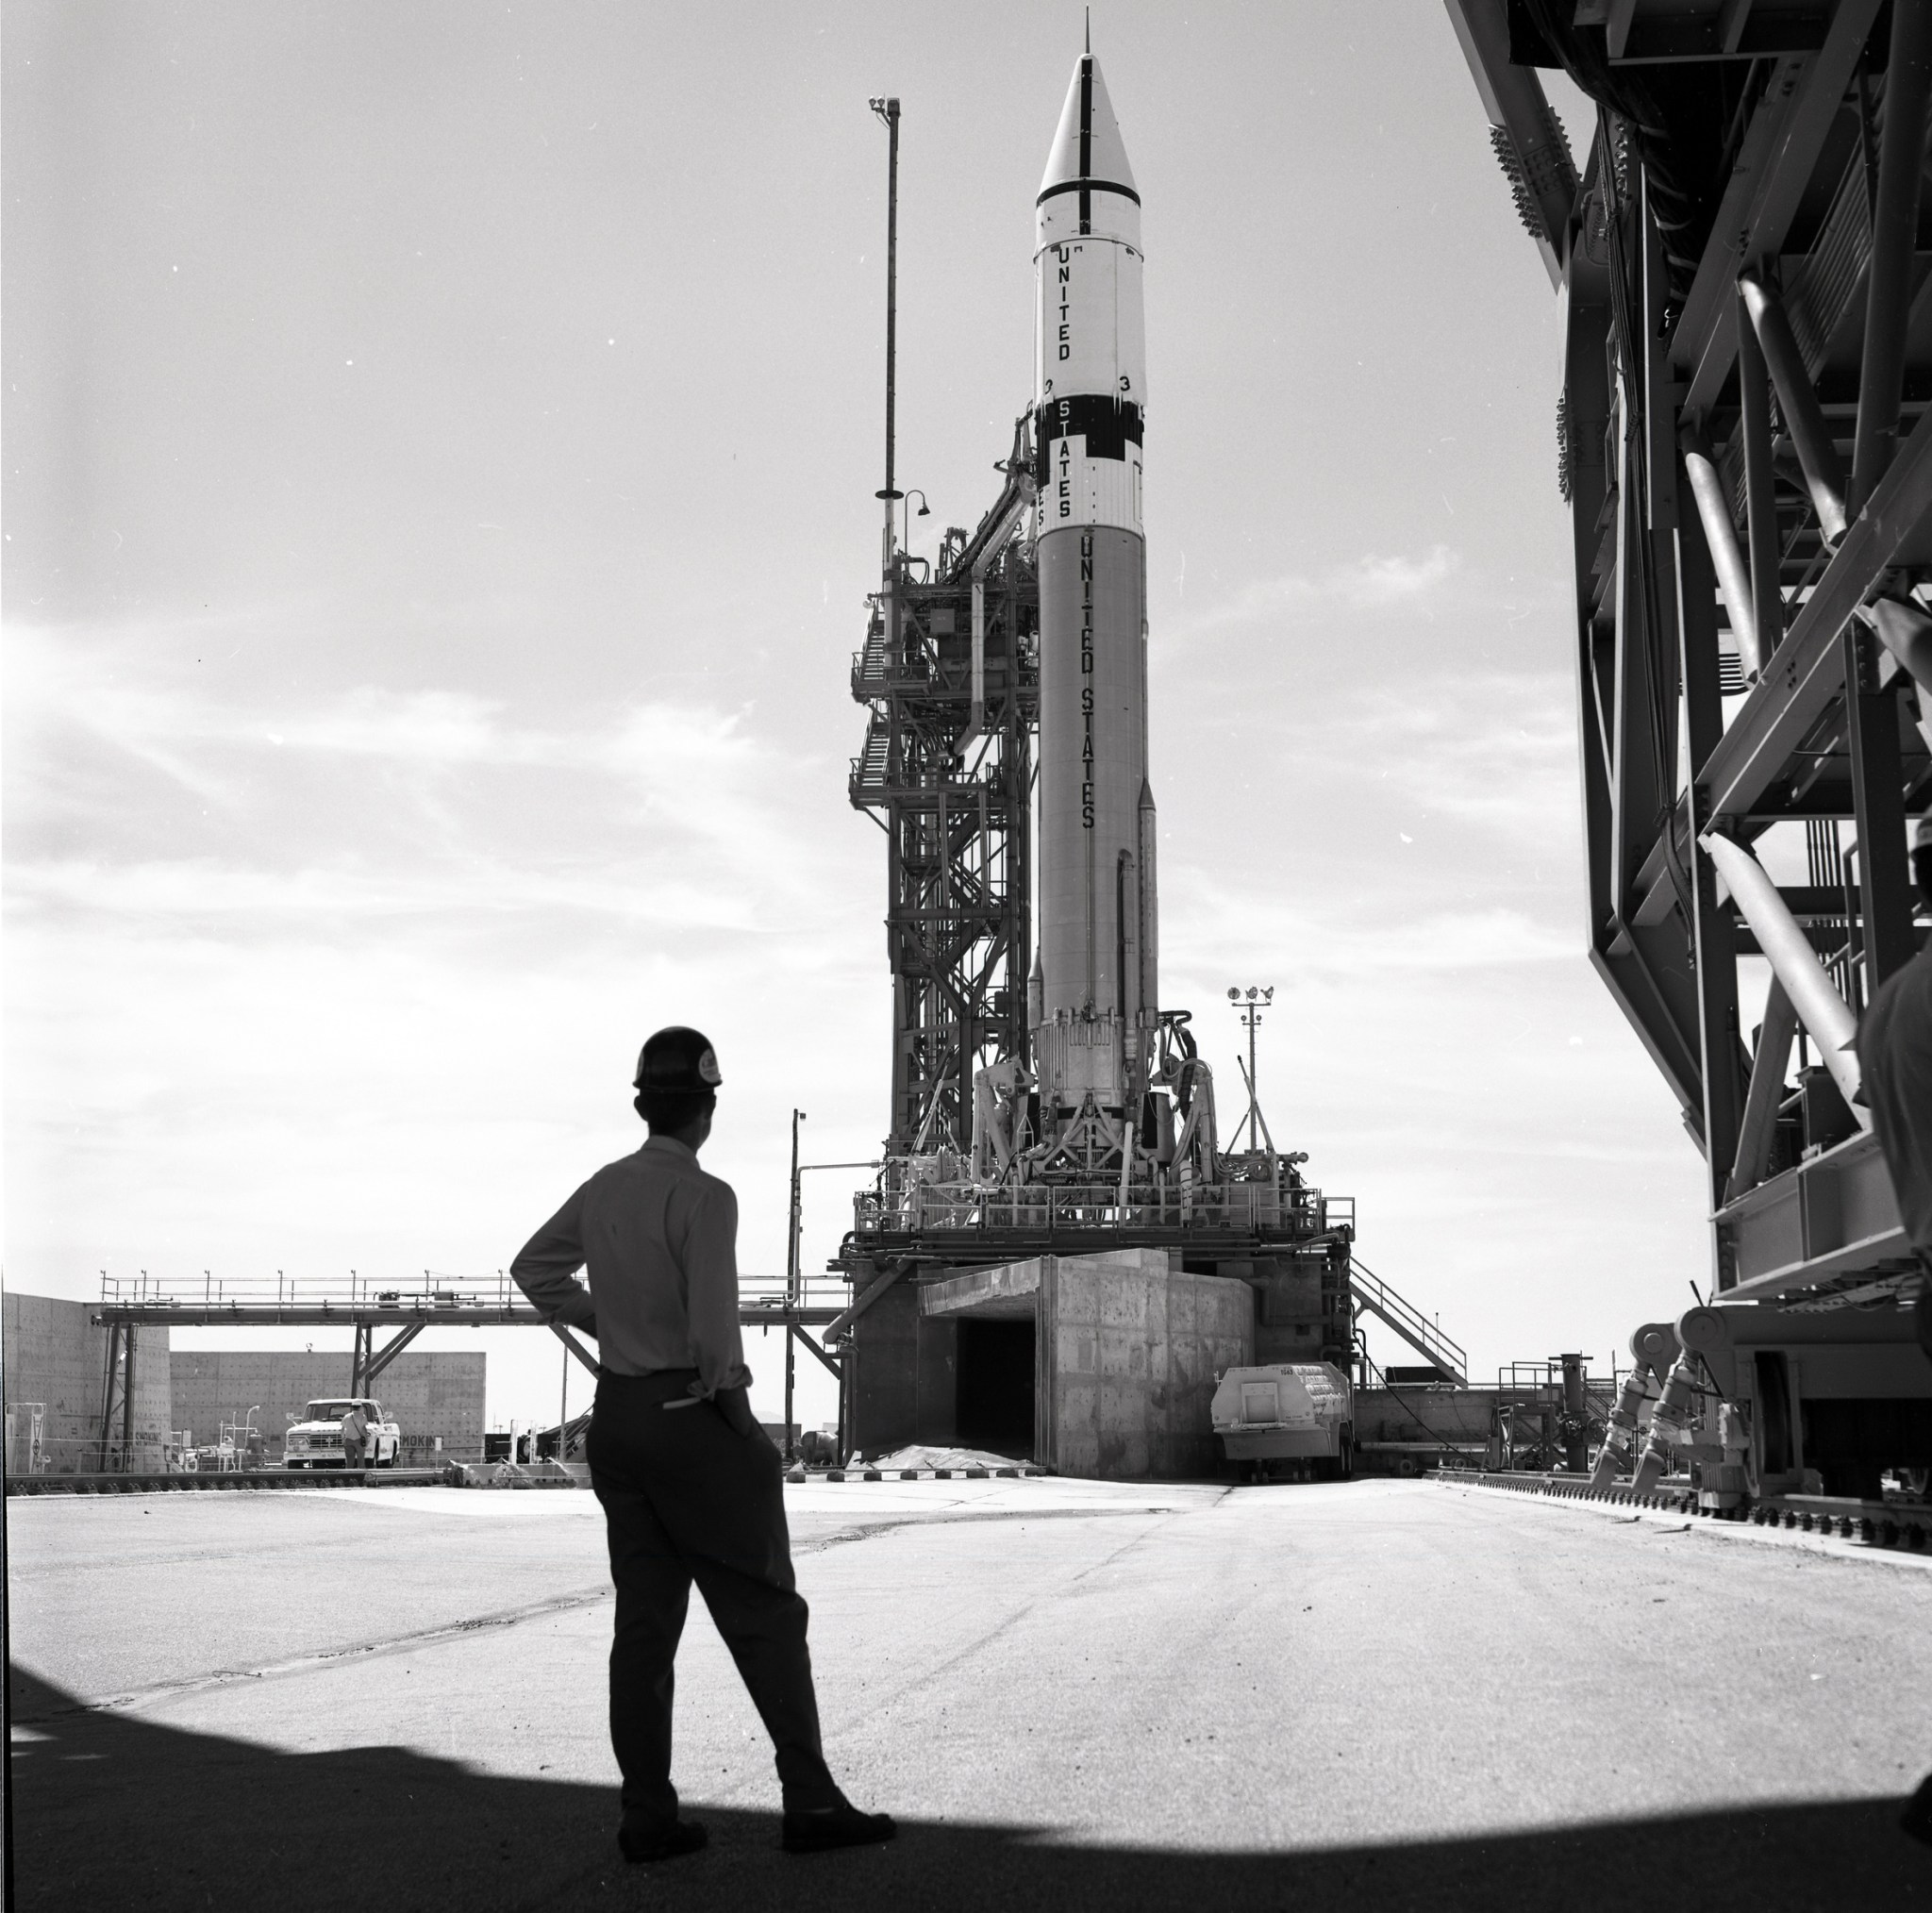 Man looking at rocket on launch pad.